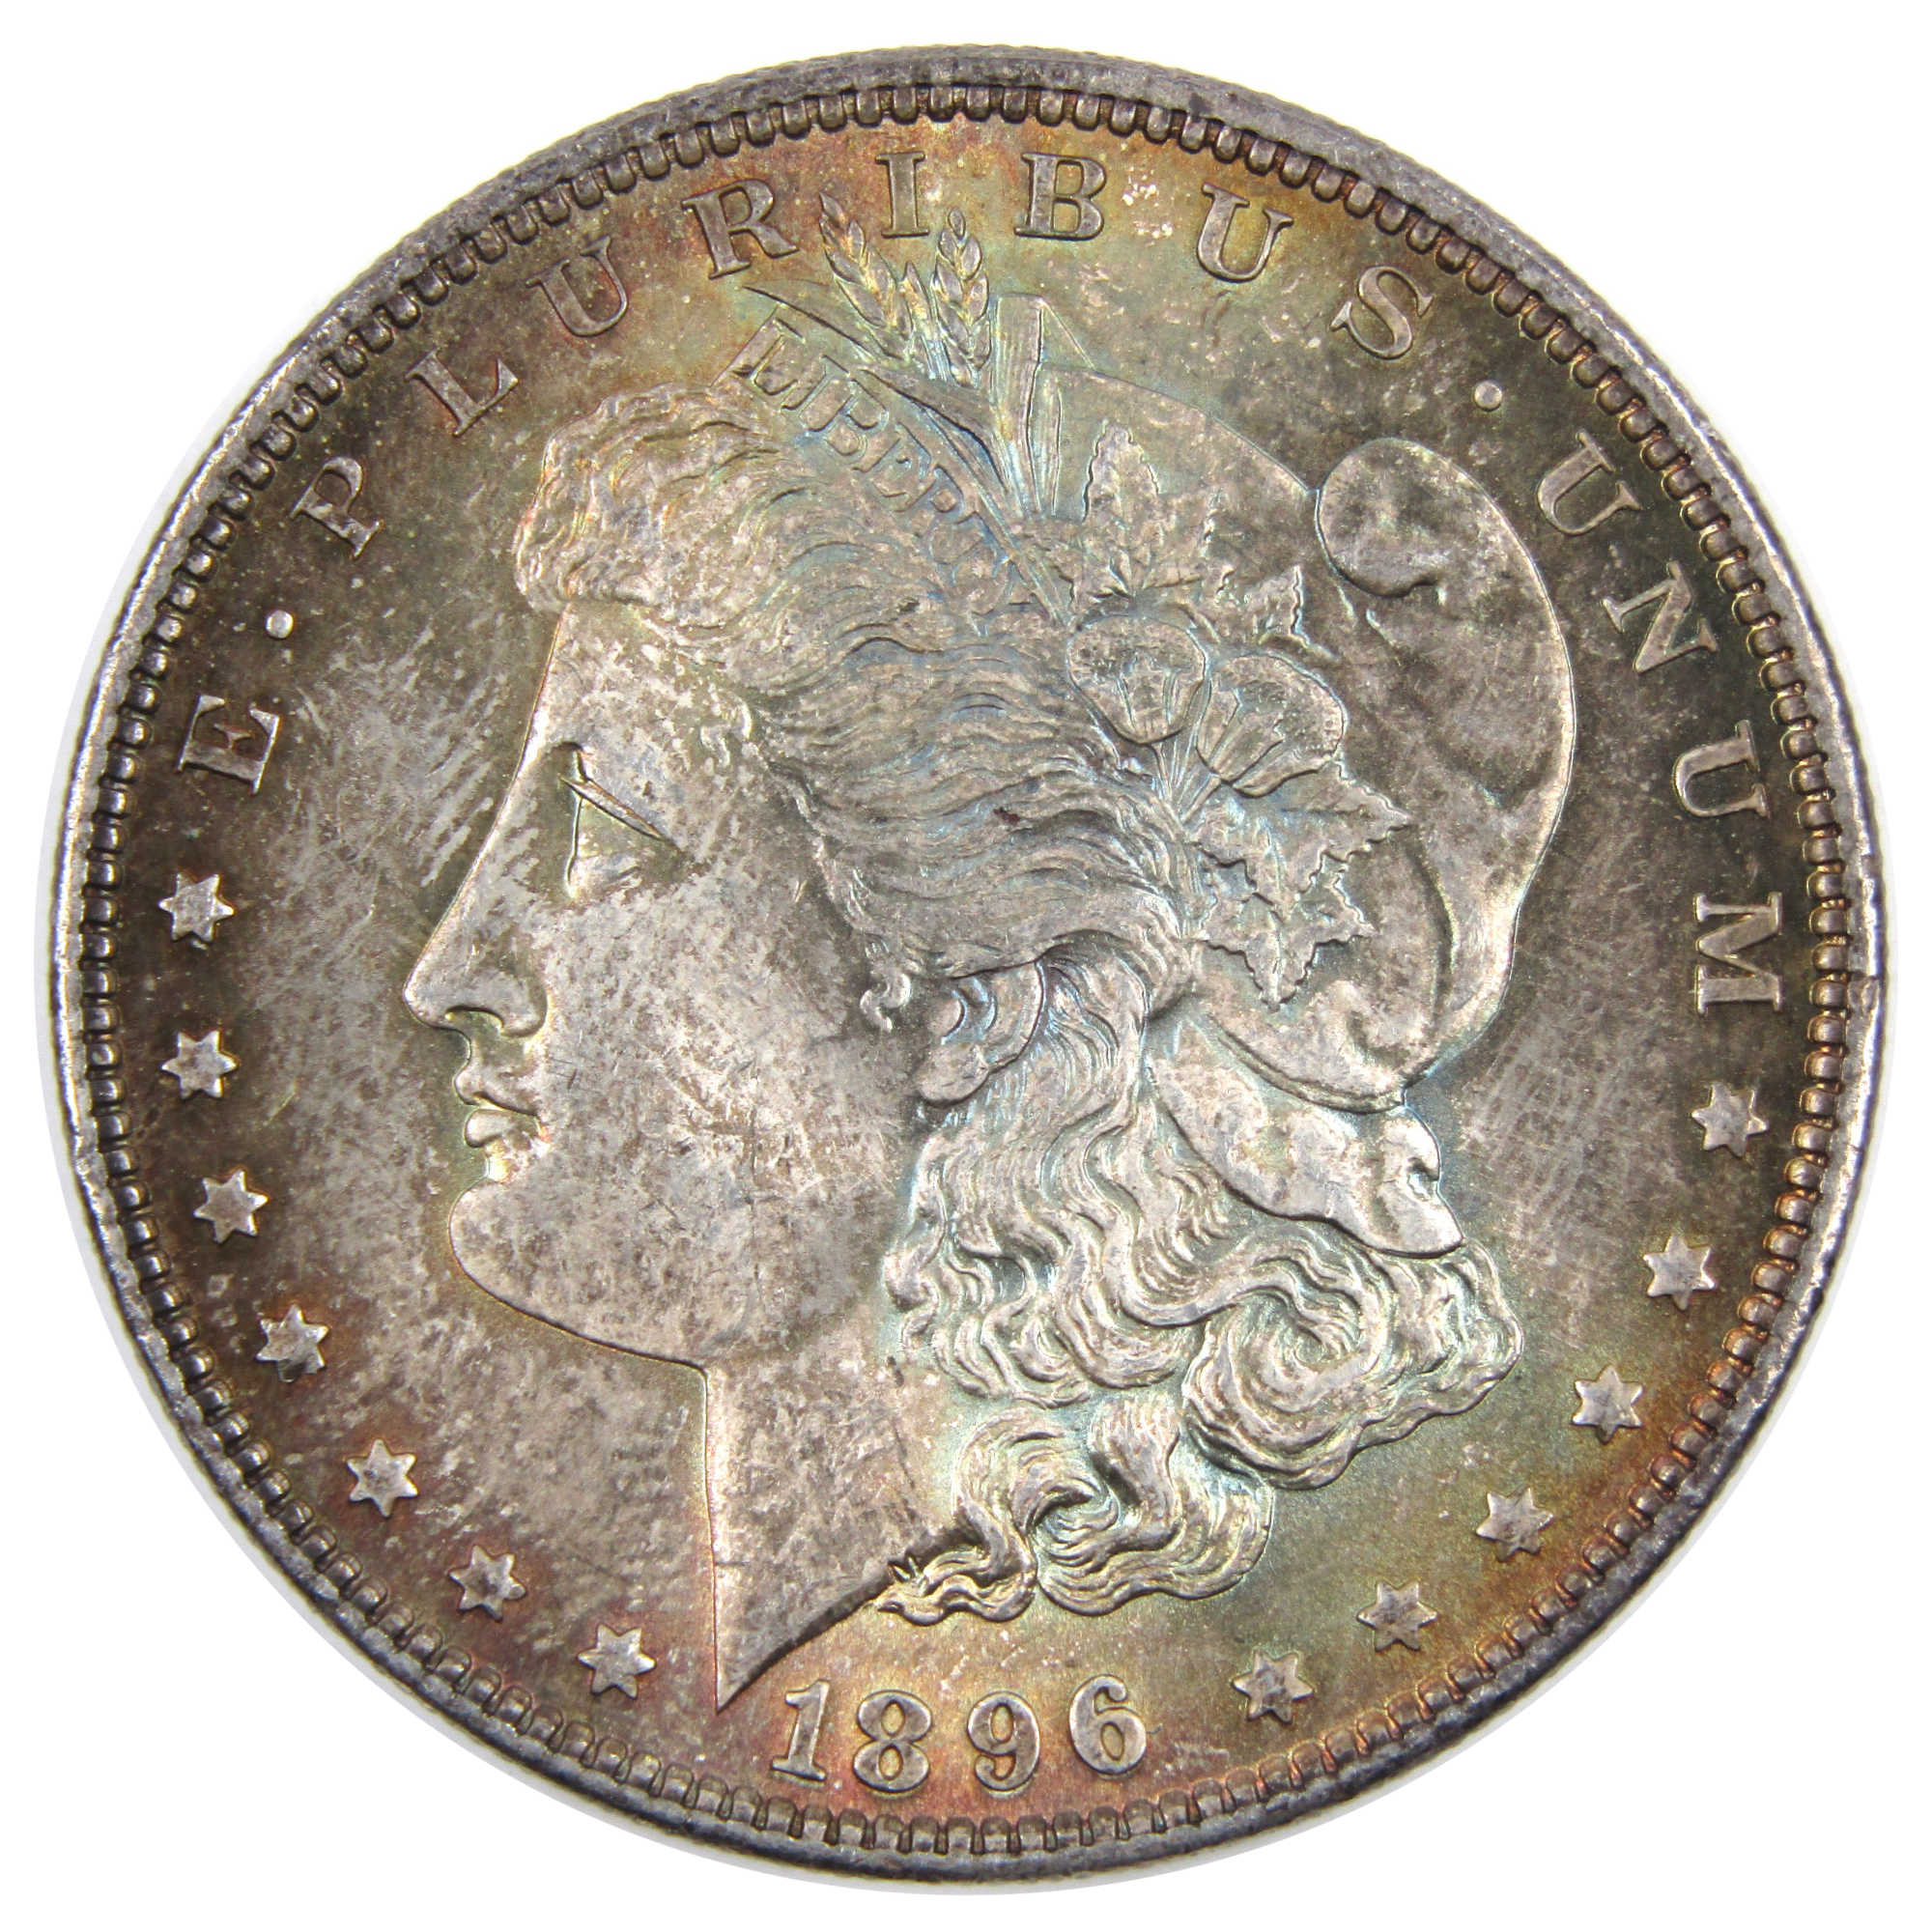 1896 Morgan Dollar BU Uncirculated Mint State 90% Silver SKU:CPC1958